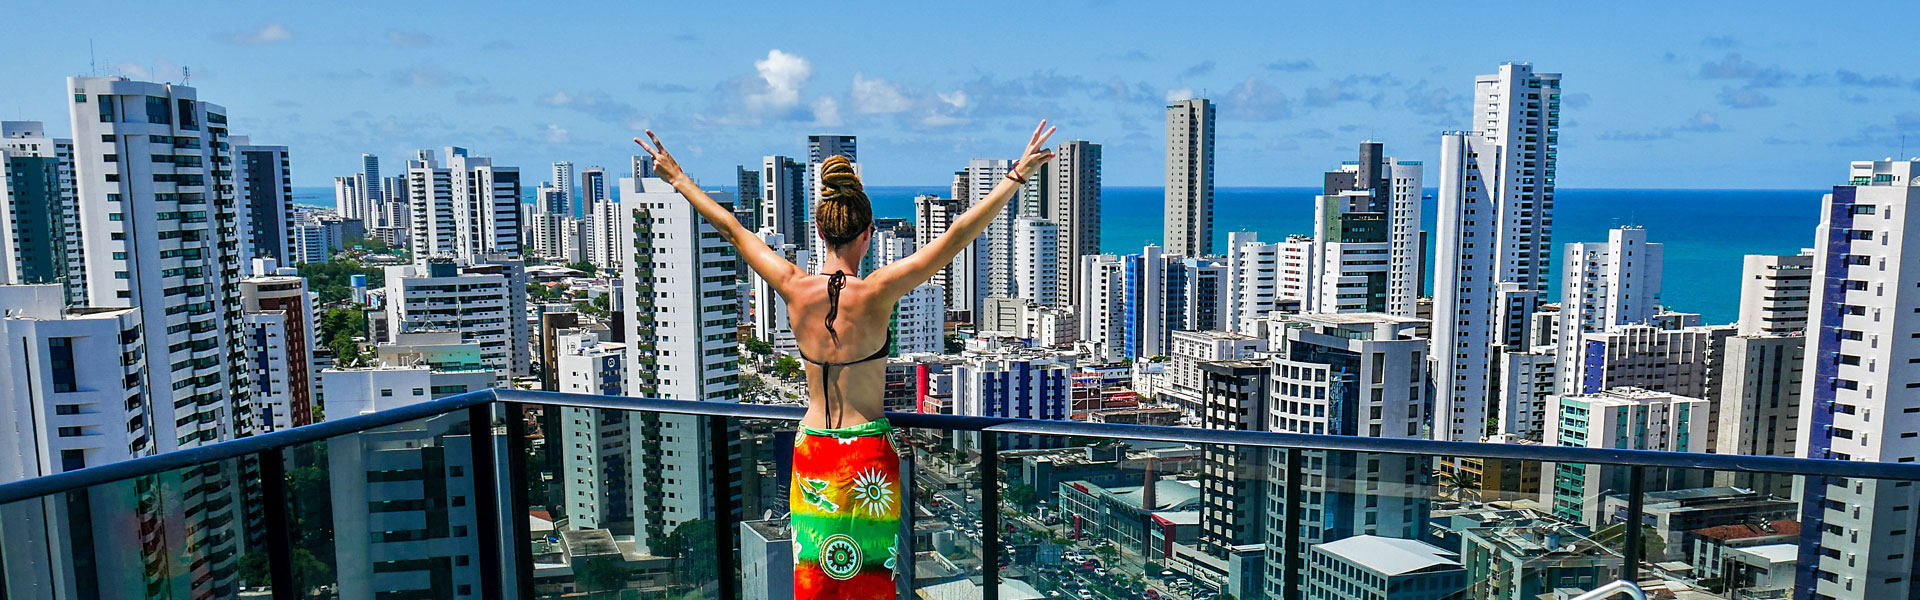 Rasta girl overlooking Boa Viagem and ocean in Recife, Brazil